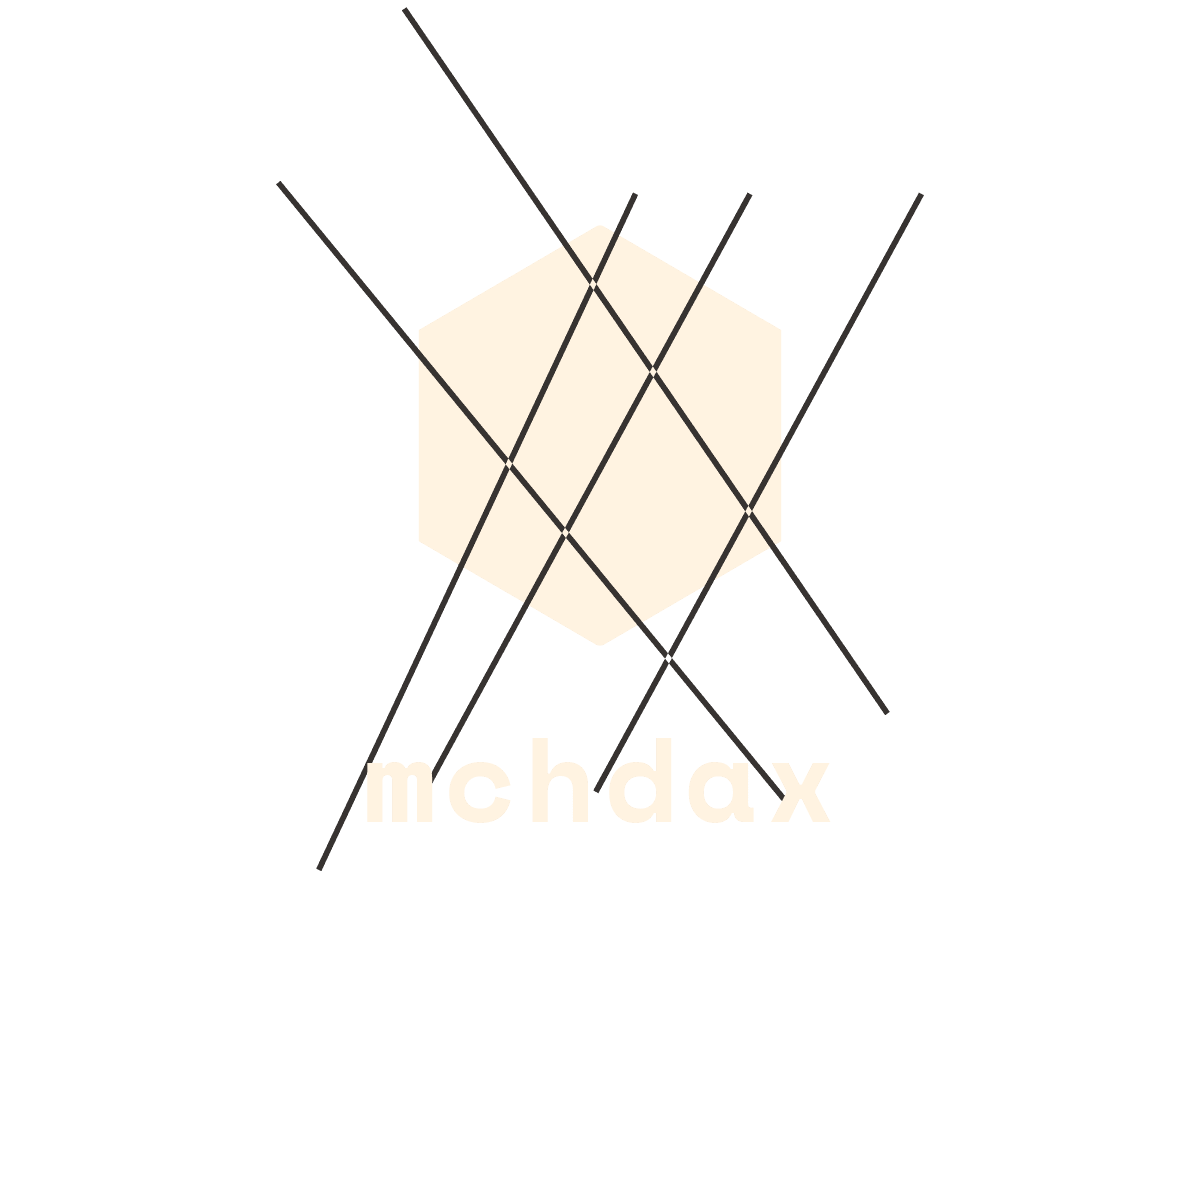 mchdax